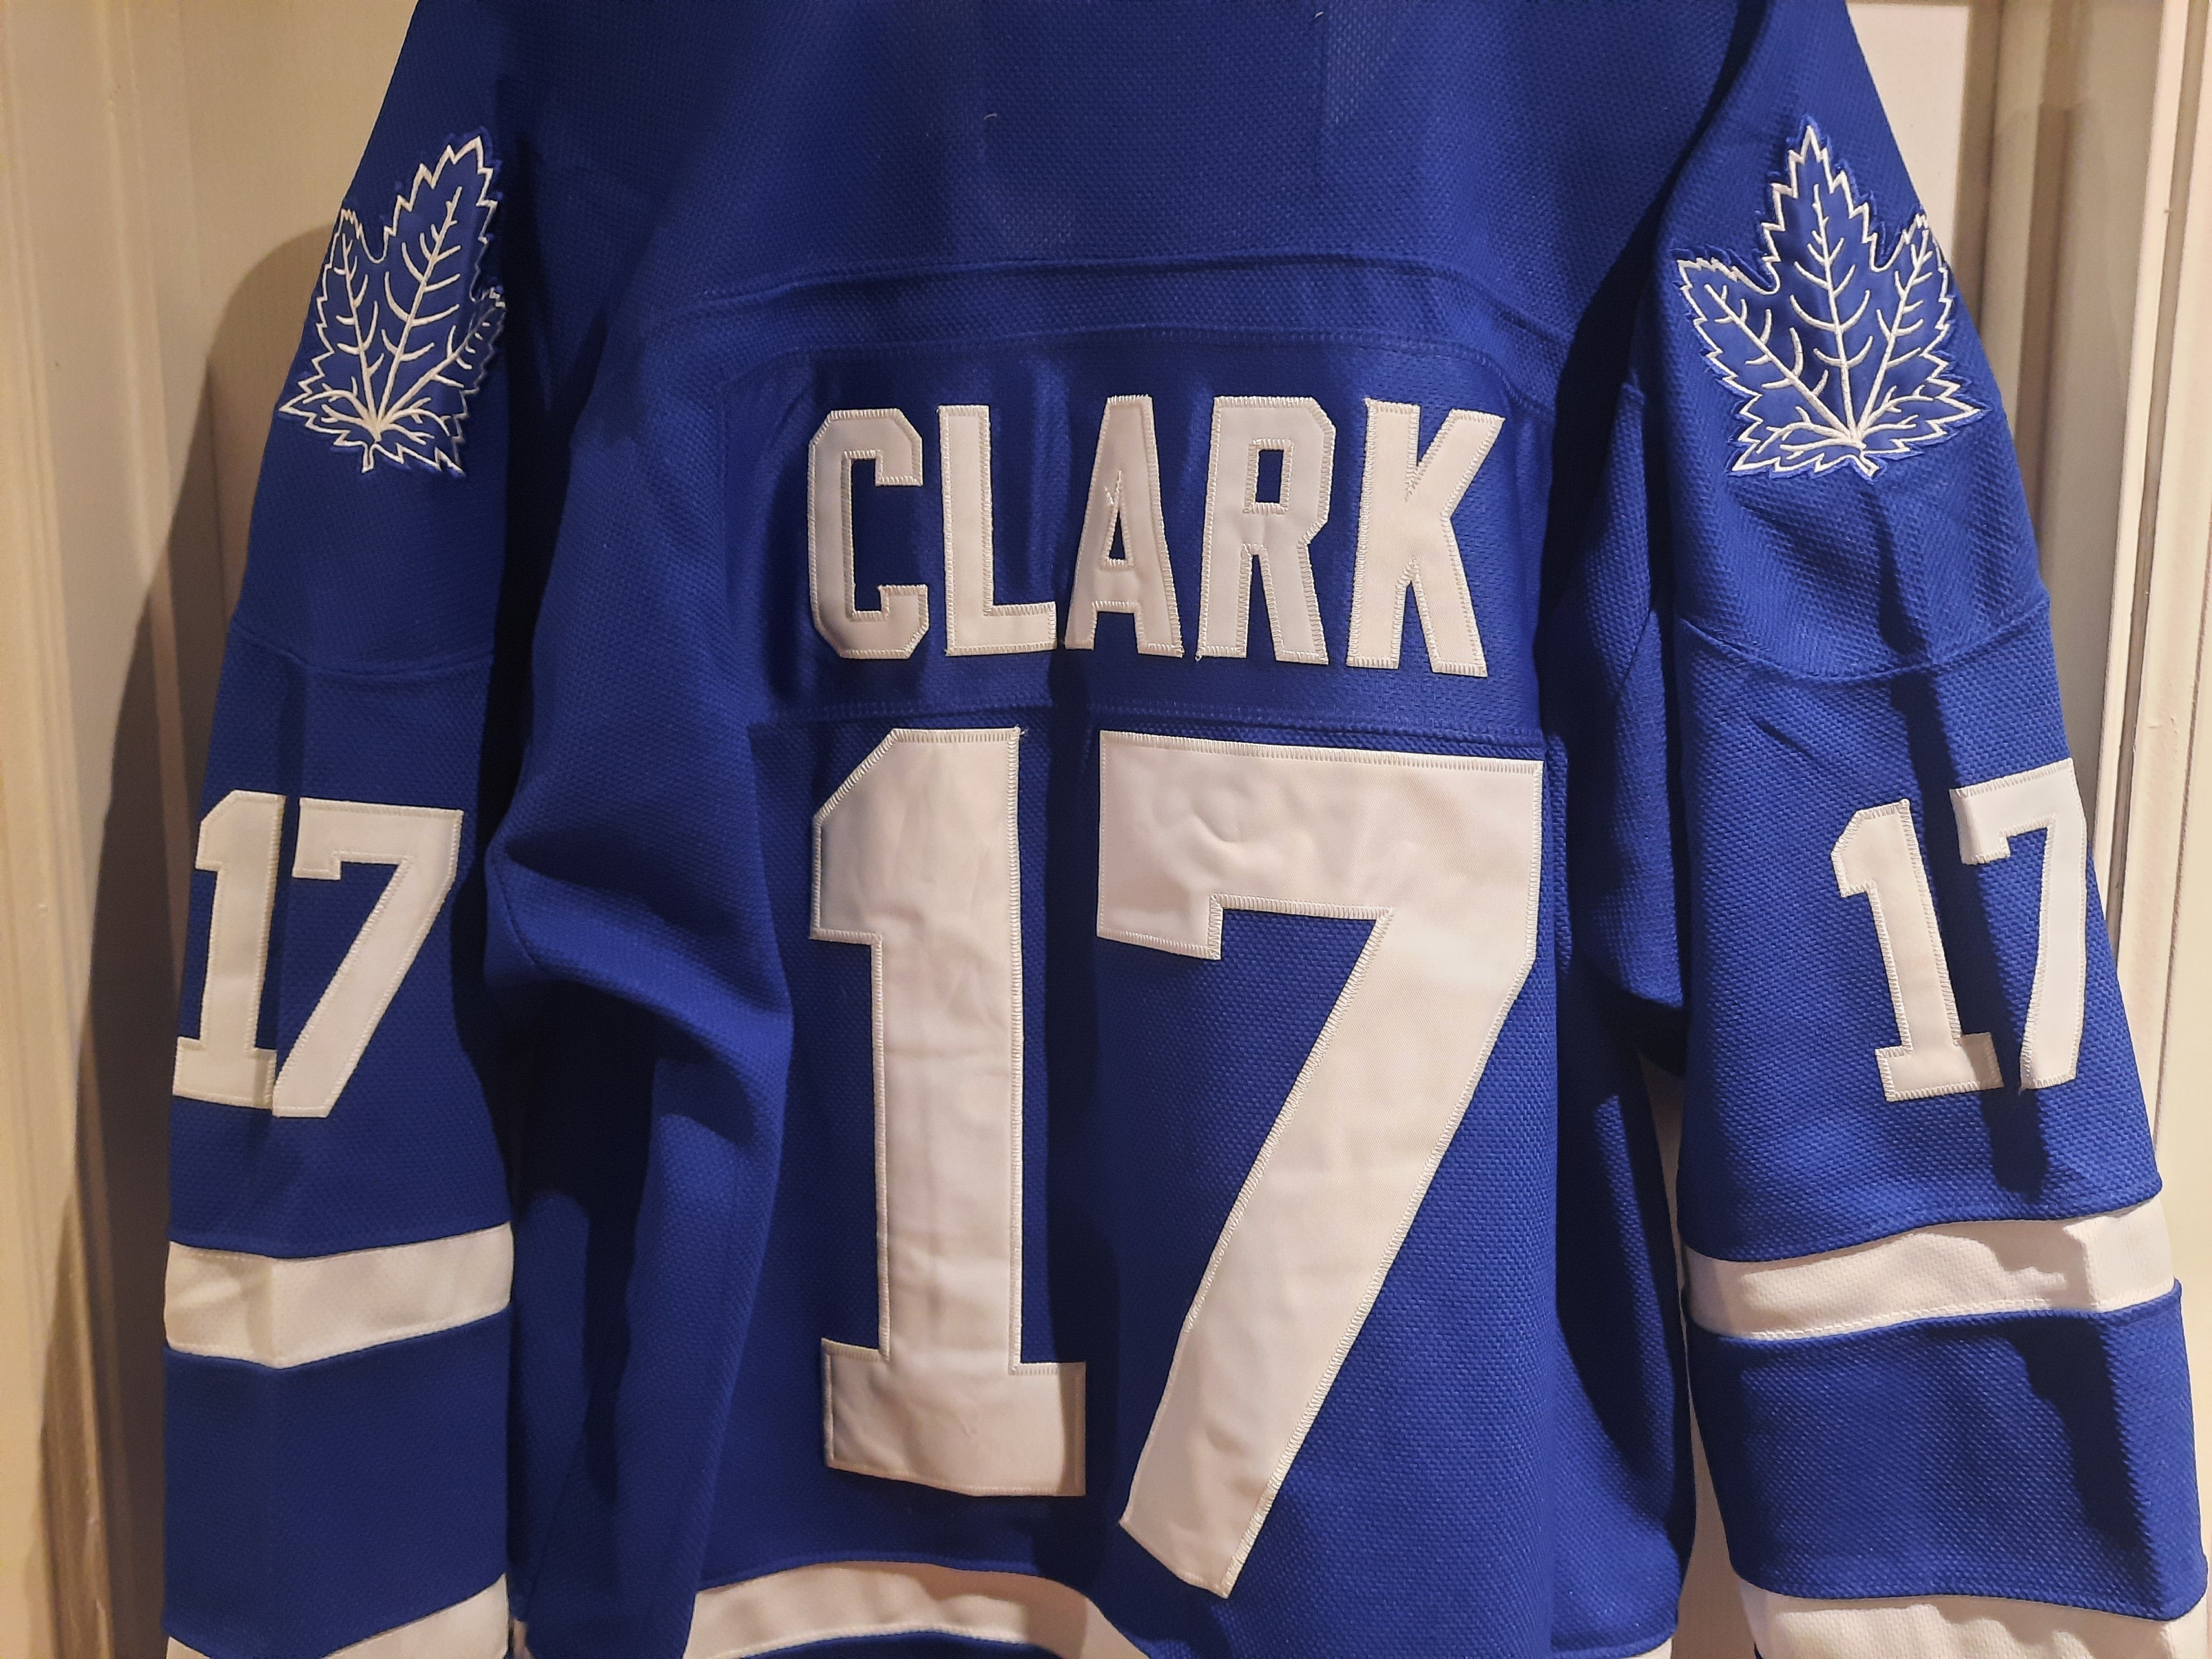 AUTHENTIC Vintage Toronto Maple Leafs Wendel Clark 17 CCM NHL Hockey Jersey  52